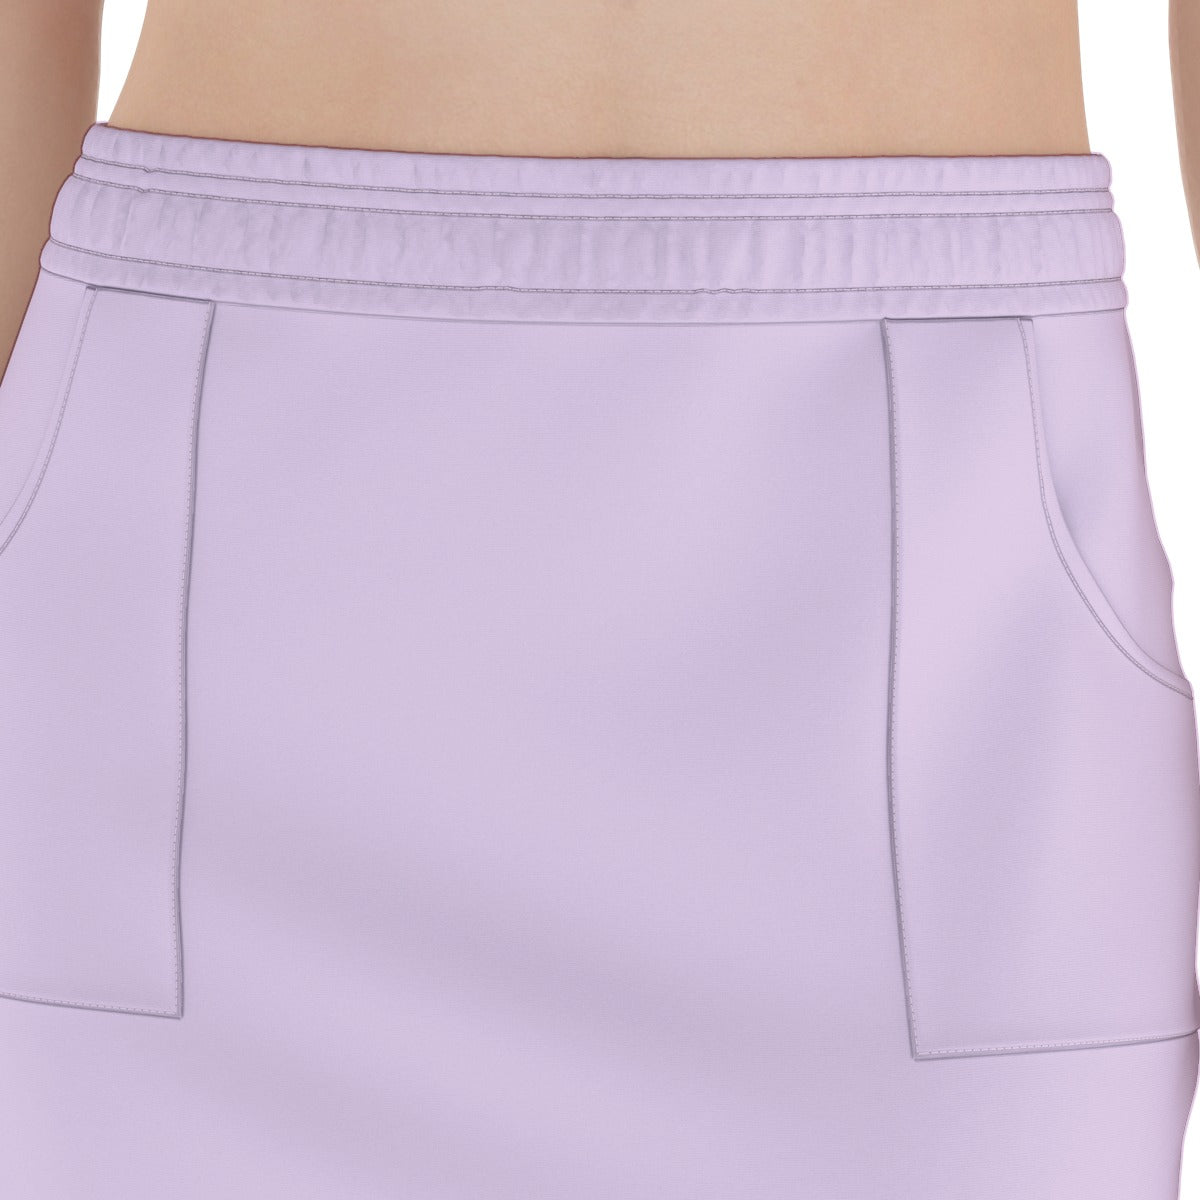 All-Over Print Women's Mid-length Pencil Skirt